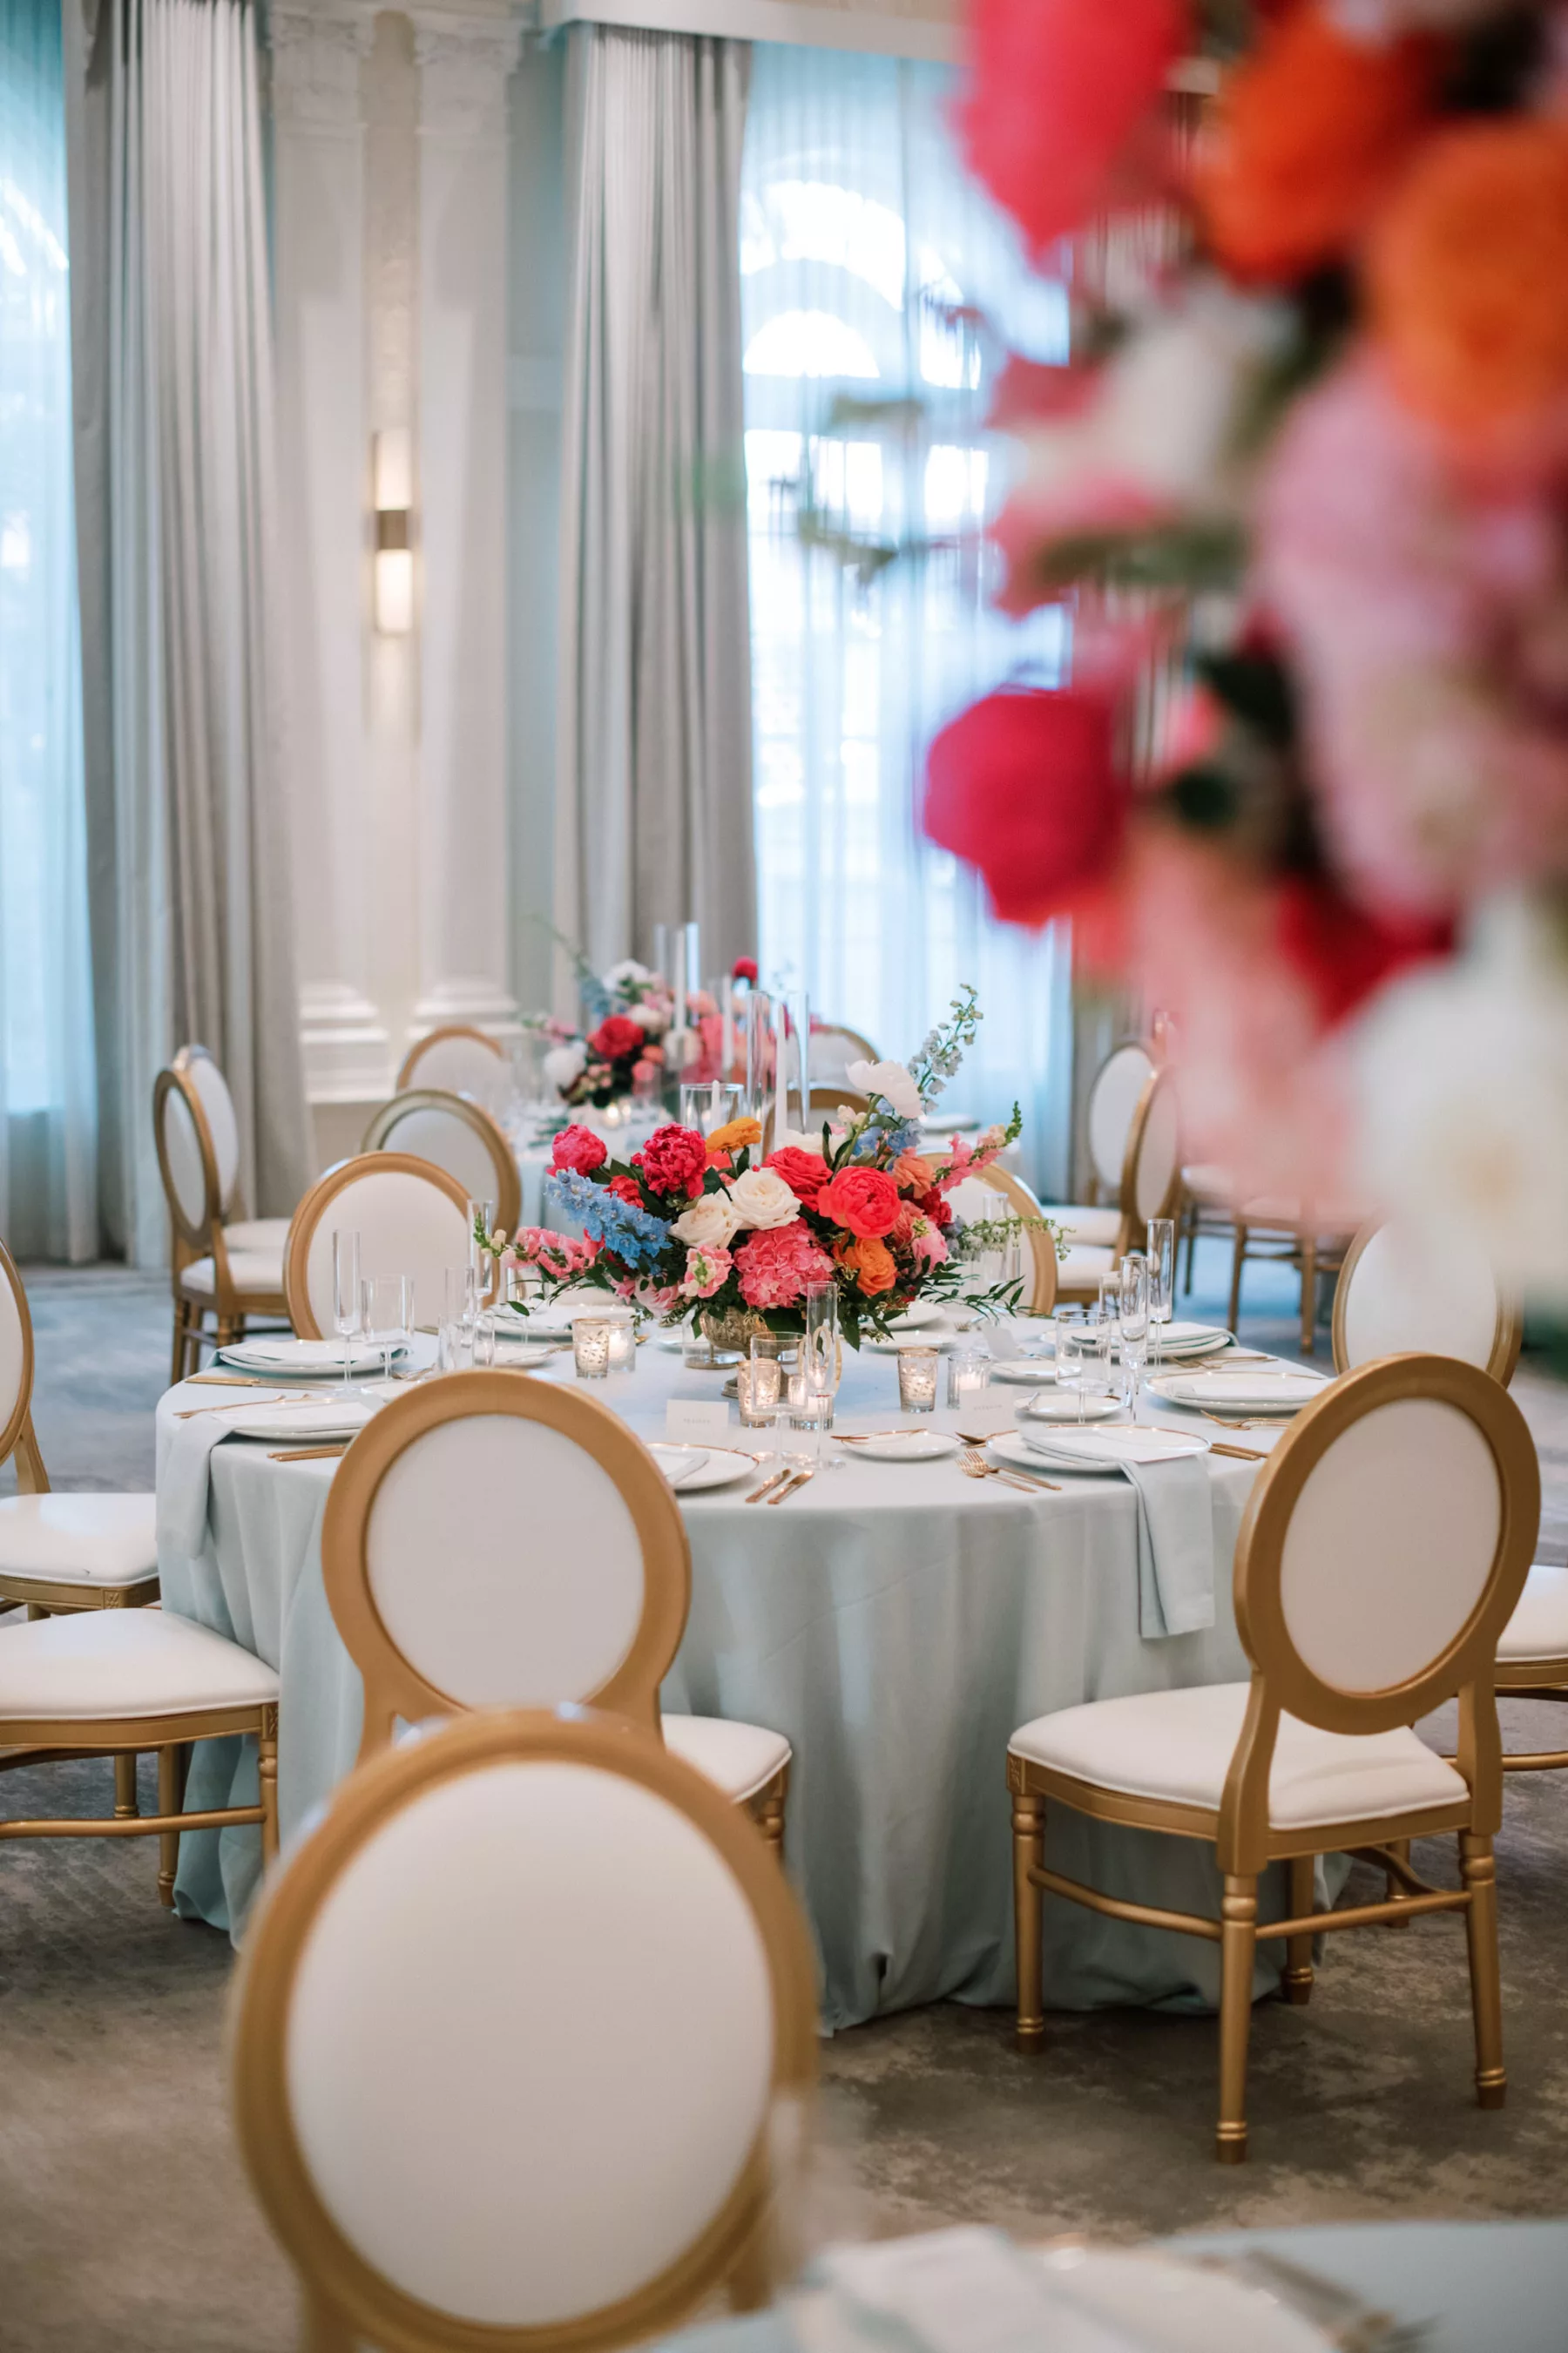 Luxurious Pink and Blue Summer Ballroom Wedding Reception Decor Ideas | Tampa Bay Florist Bruce Wayne Florals | Kate Ryan Event Rentals